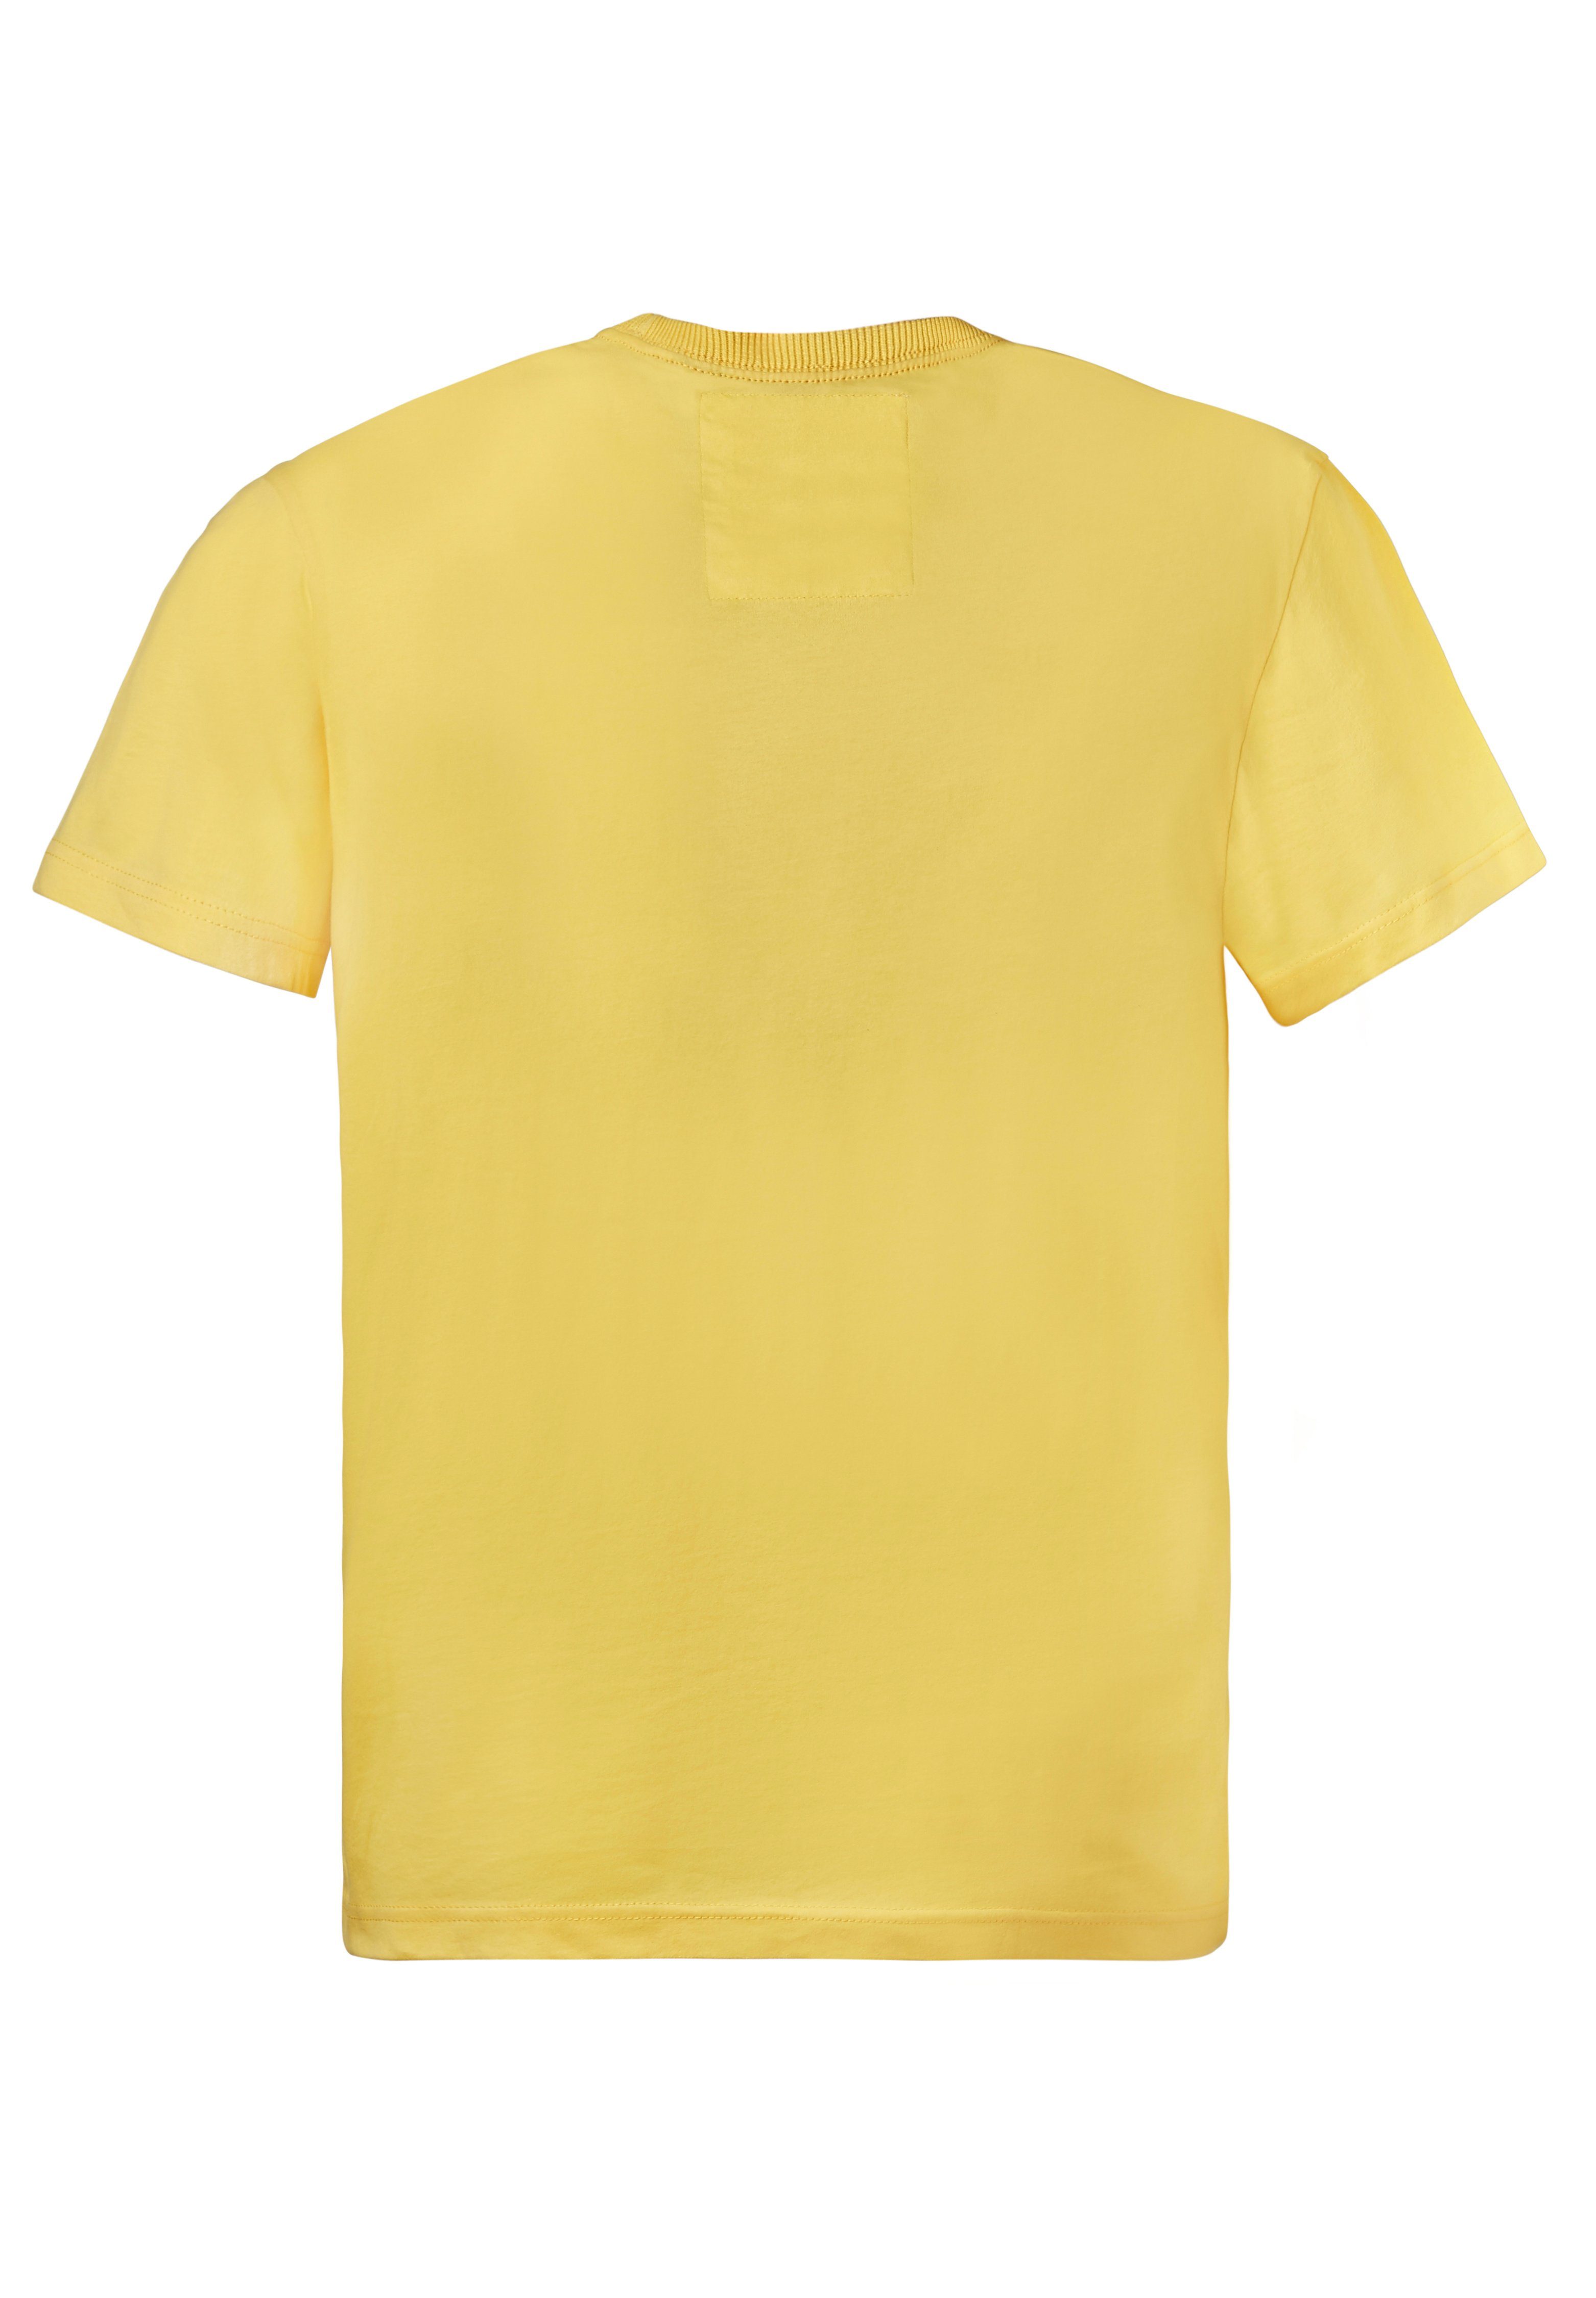 T-Shirt ALEX 68 yellow 0110 Cordon Sport